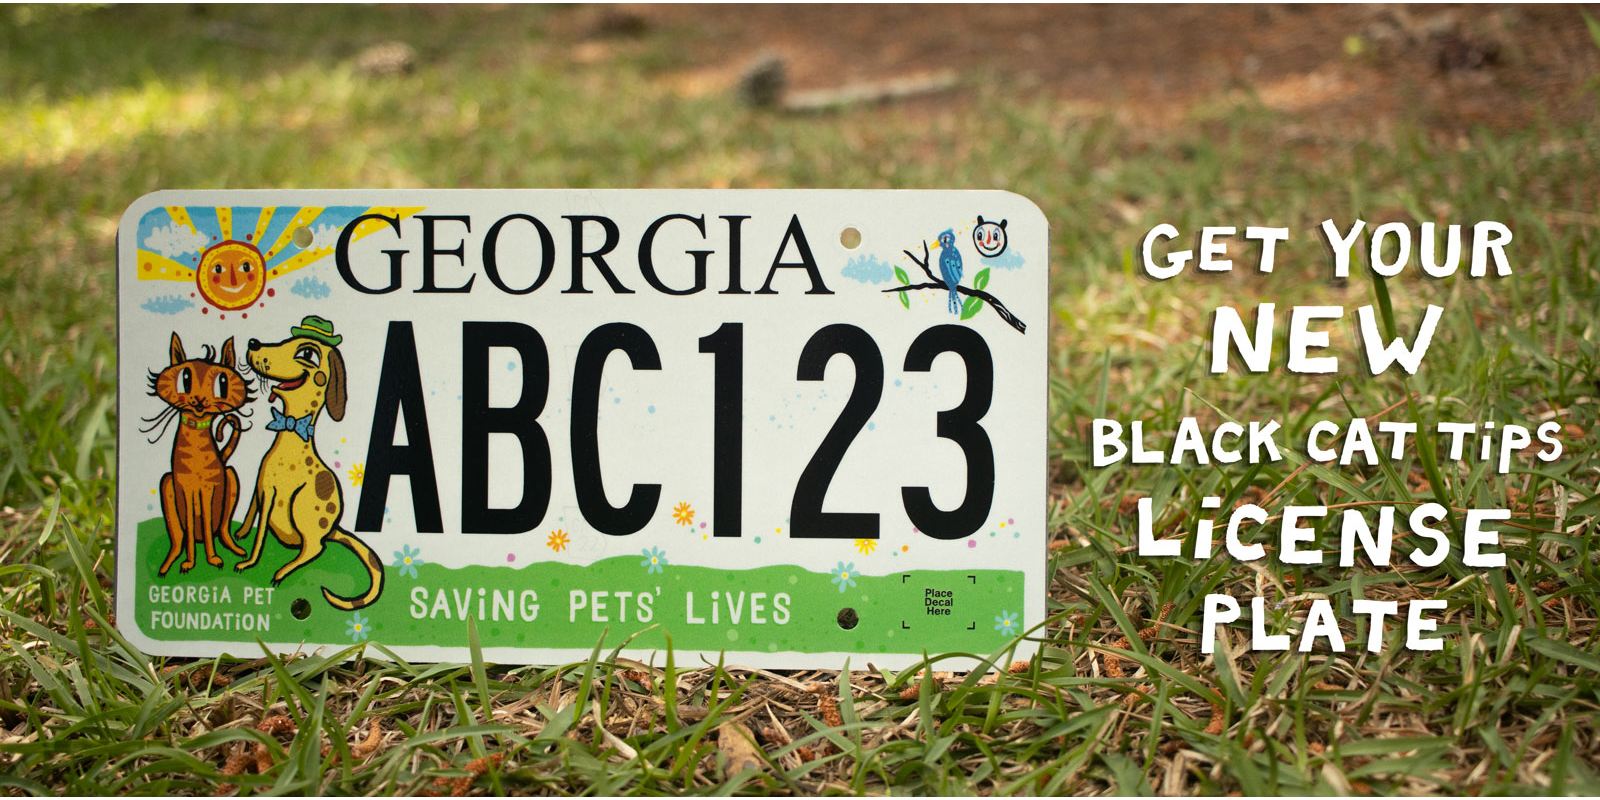 Georgia Pet Foundation x BlackCatTips License Plate